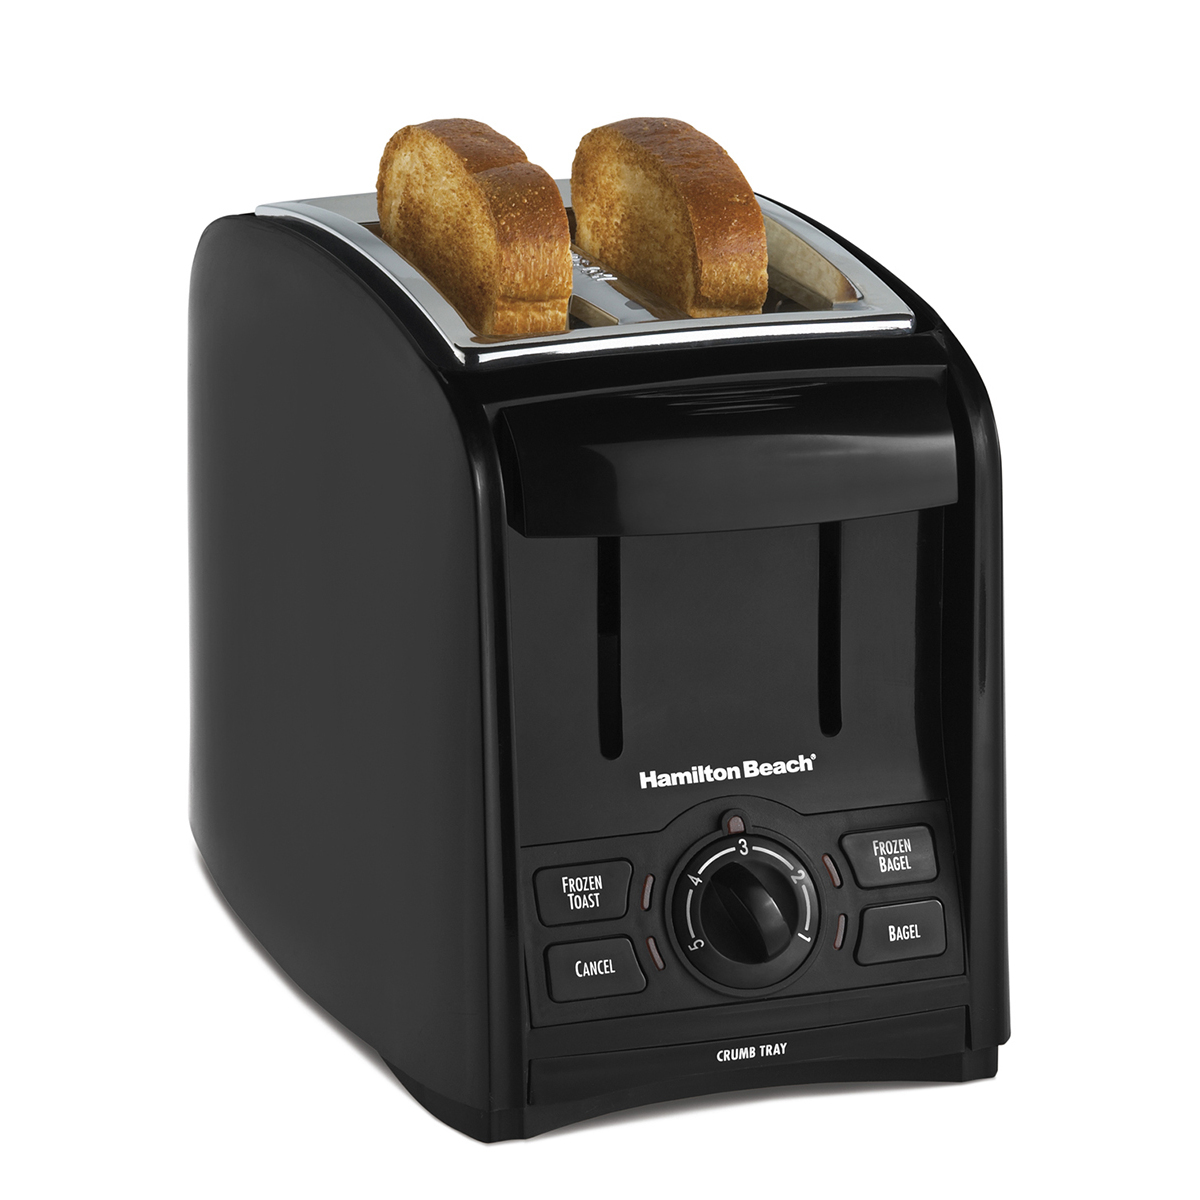 PerfectToast 2 Slice Toaster - Black (22121)